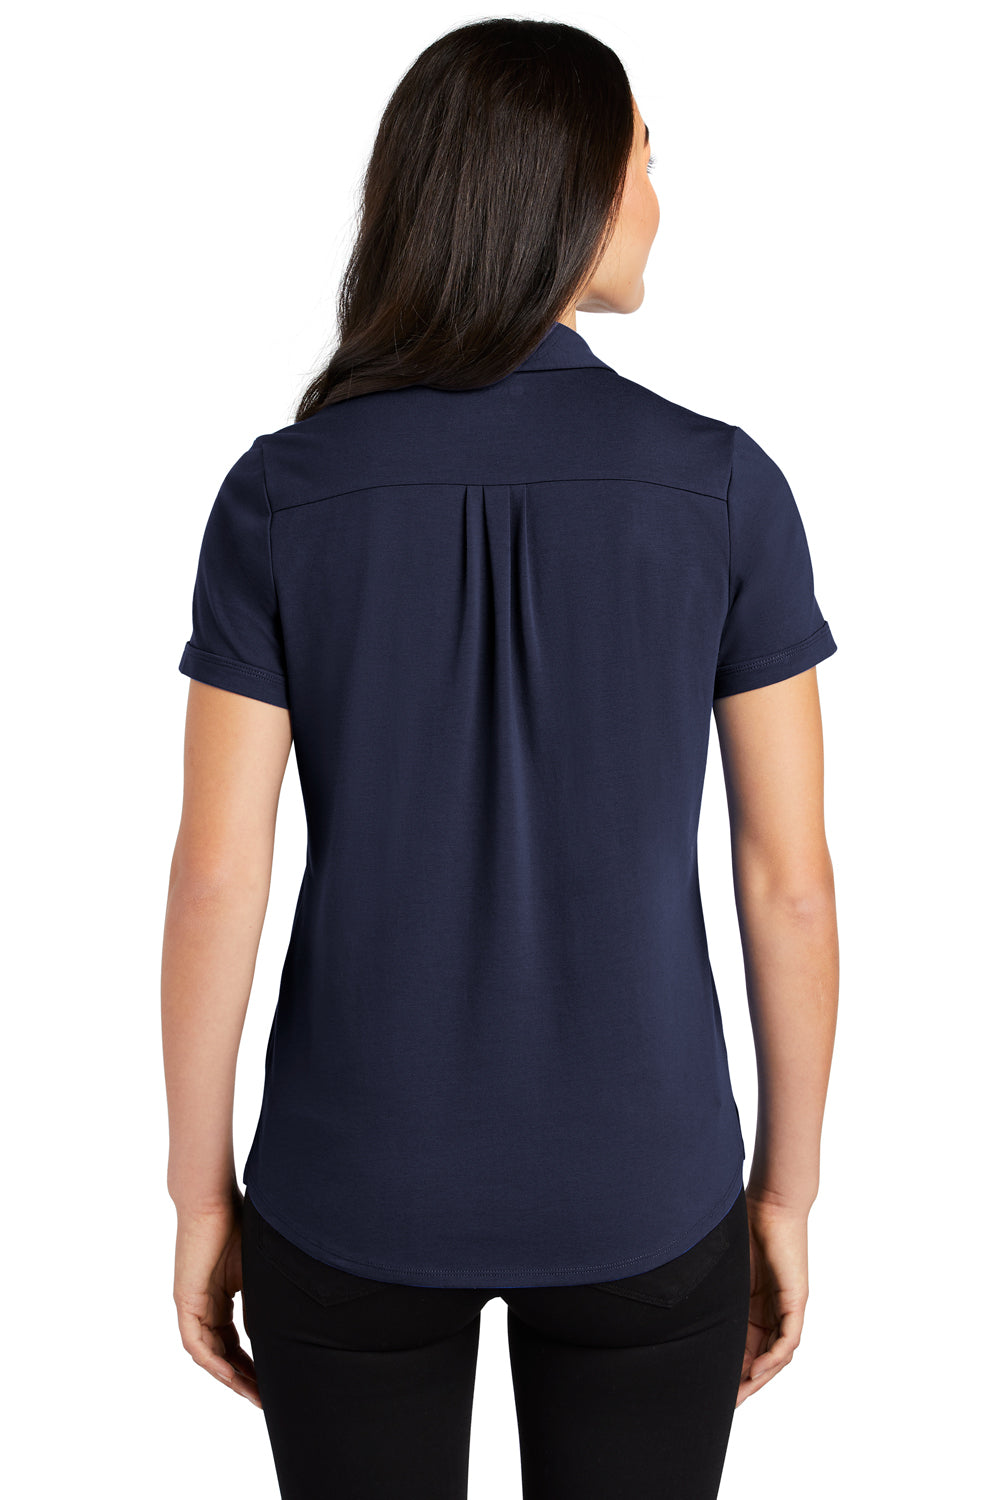 Ogio LOG138 Womens Limit Moisture Wicking Short Sleeve Polo Shirt Navy Blue Back